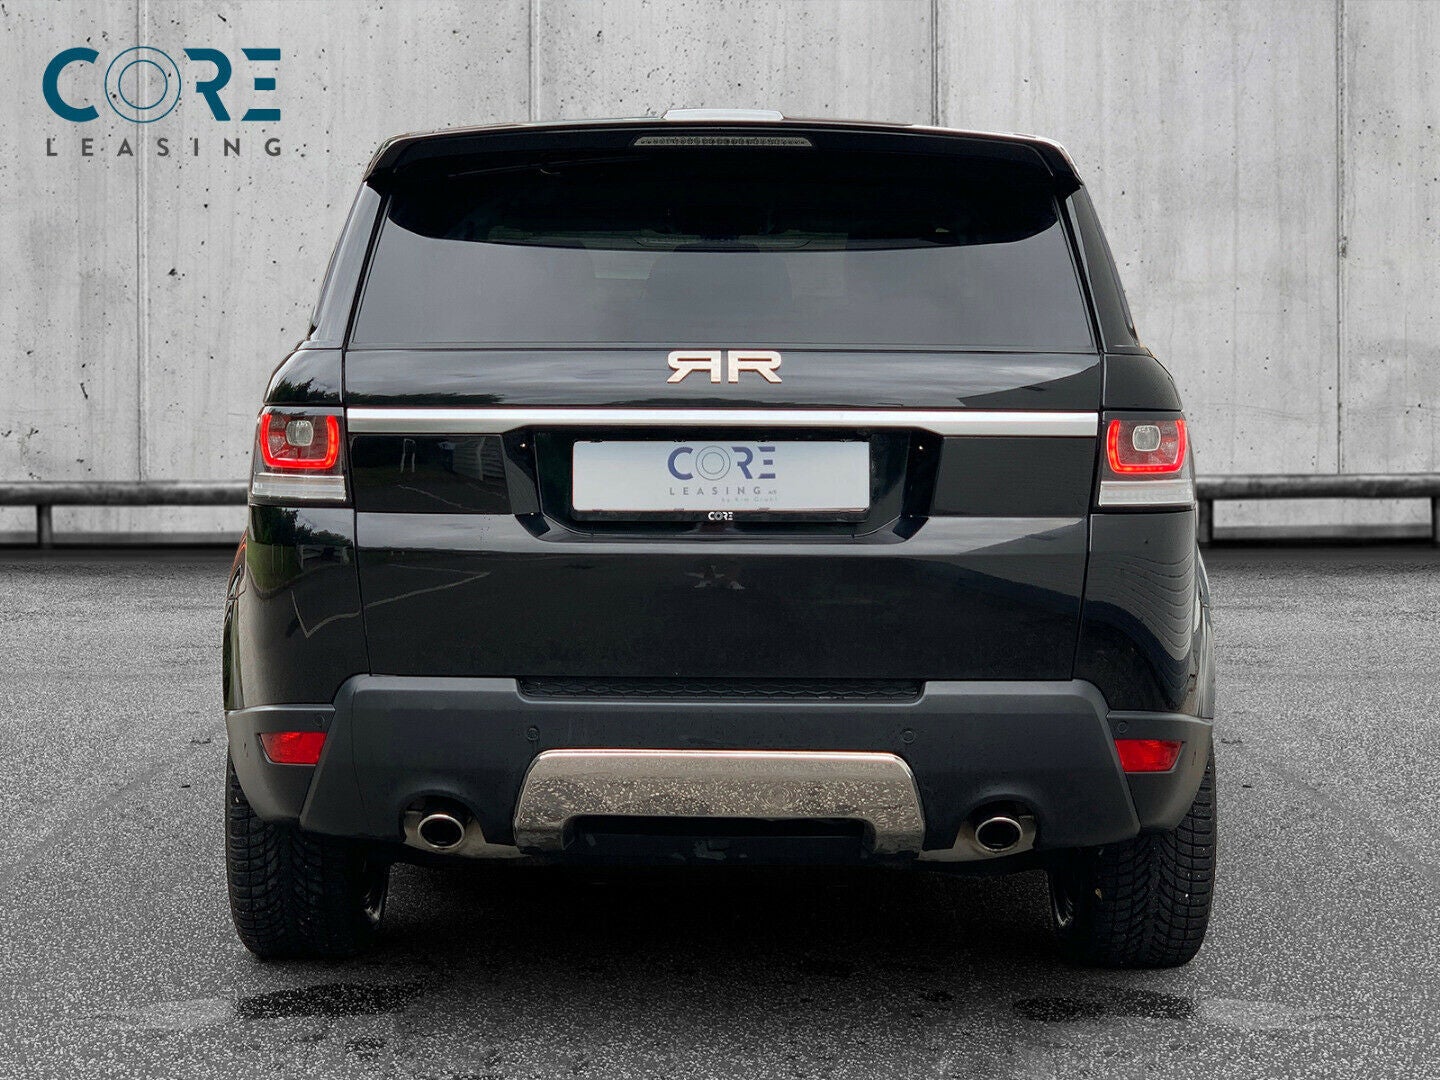 Sortmetal Land Rover Range Rover Sport TDV6 HSE aut. fra 2015 parkeret foran en betonmur. CORE Leasing A/S er eksperter i Land Rover leasing.